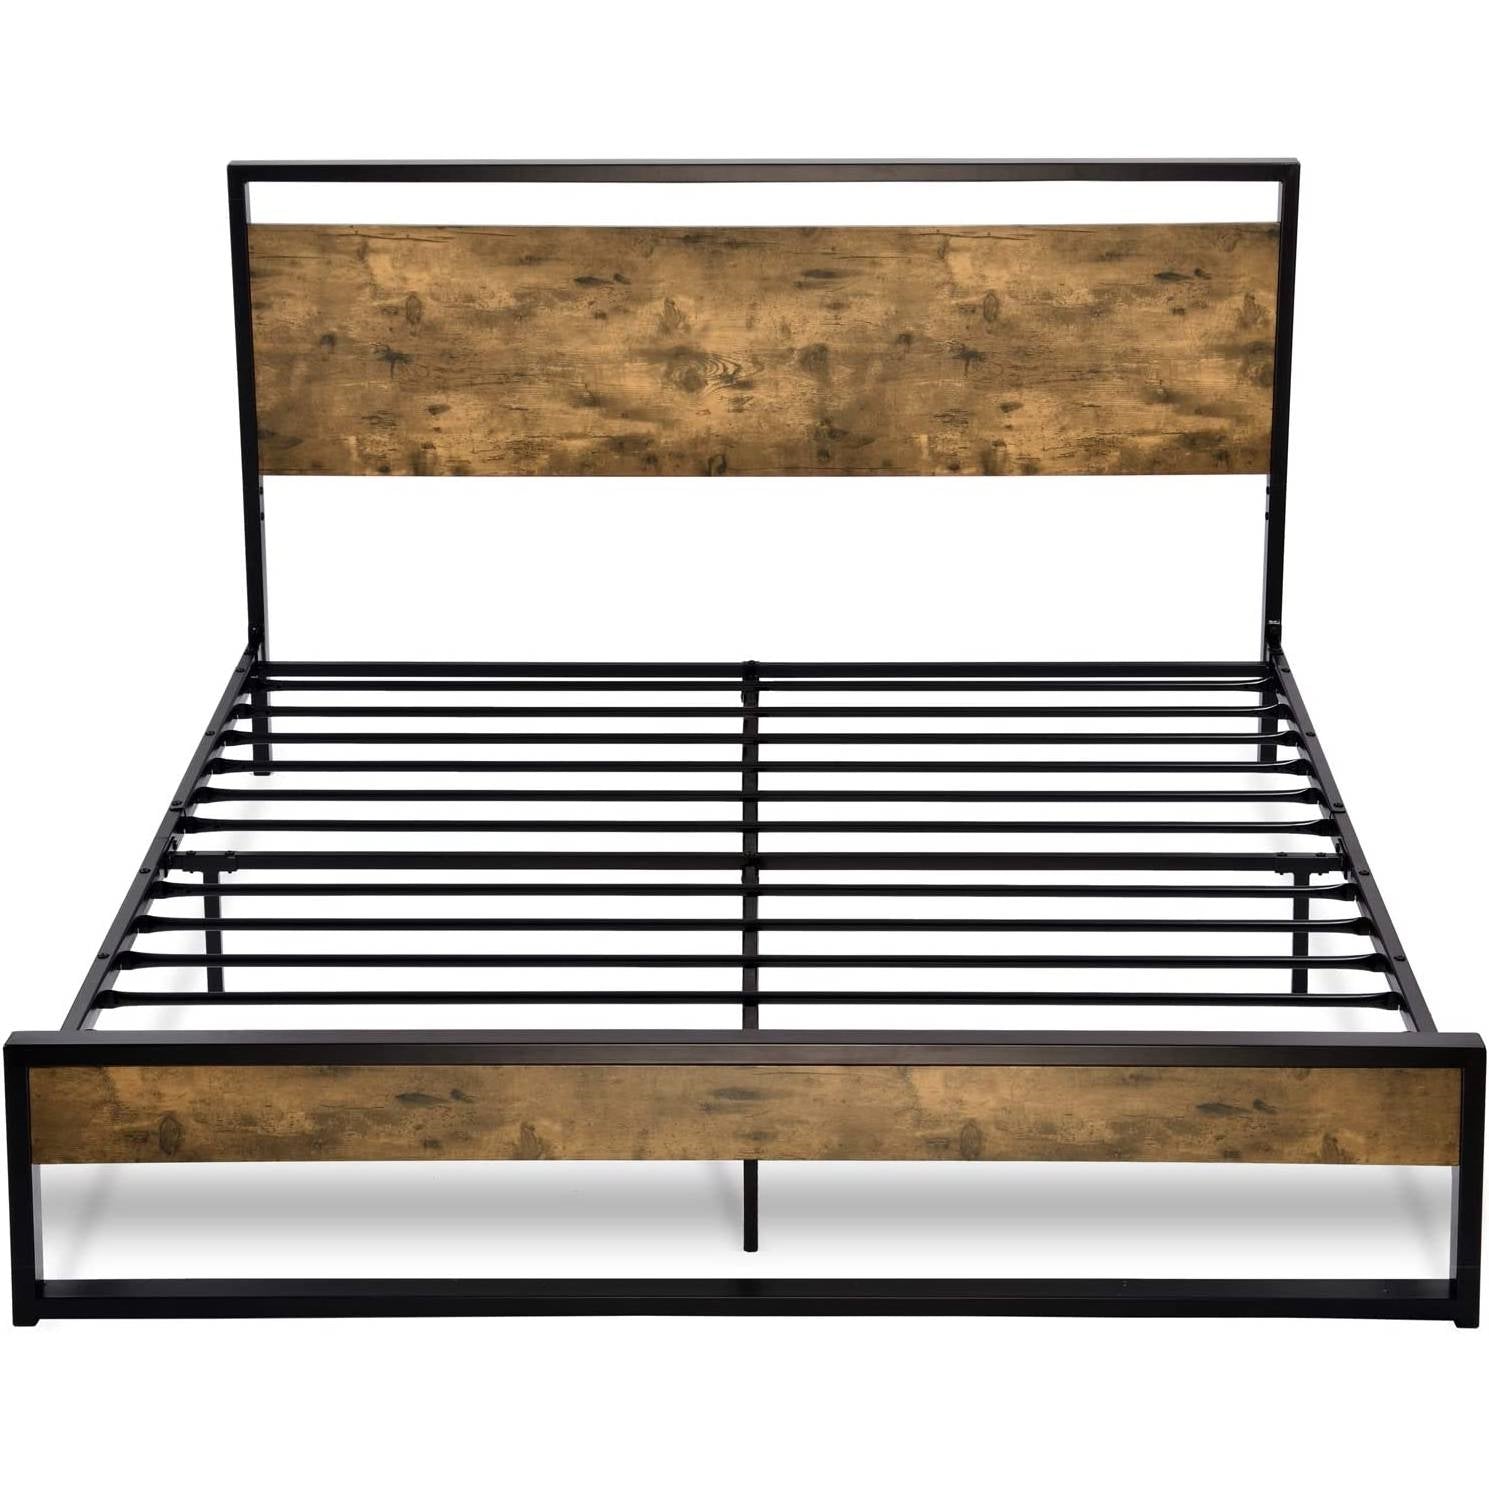 FastFurnishings Queen size Metal Wood Platform Bed Frame with Industrial Headboard